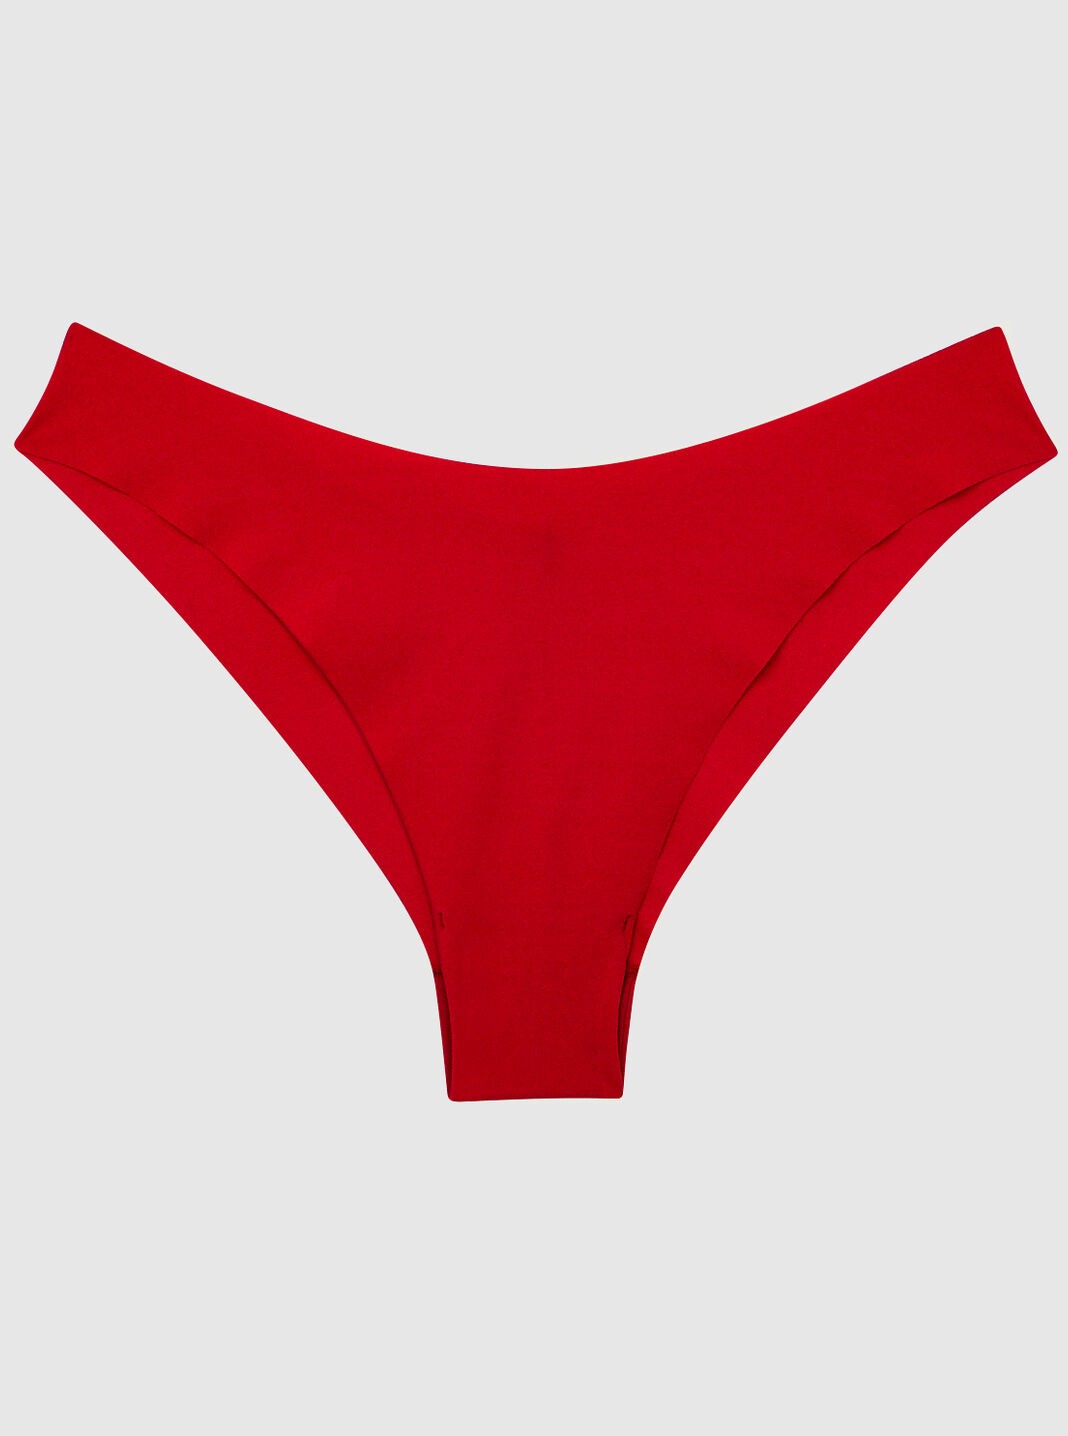 Buy SPLORR Women HotWife Printed Bikini Underwear,Seamless Breathable  Ladies Panties,No Show Invisible Stretch Briefs Undies for Women at